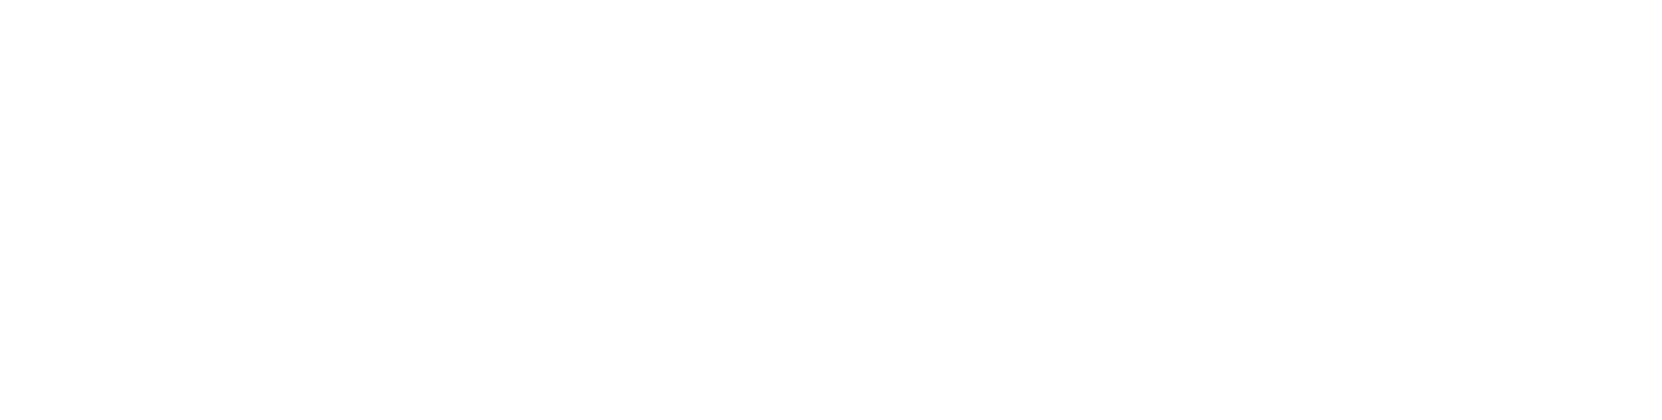 nordstrand-logo